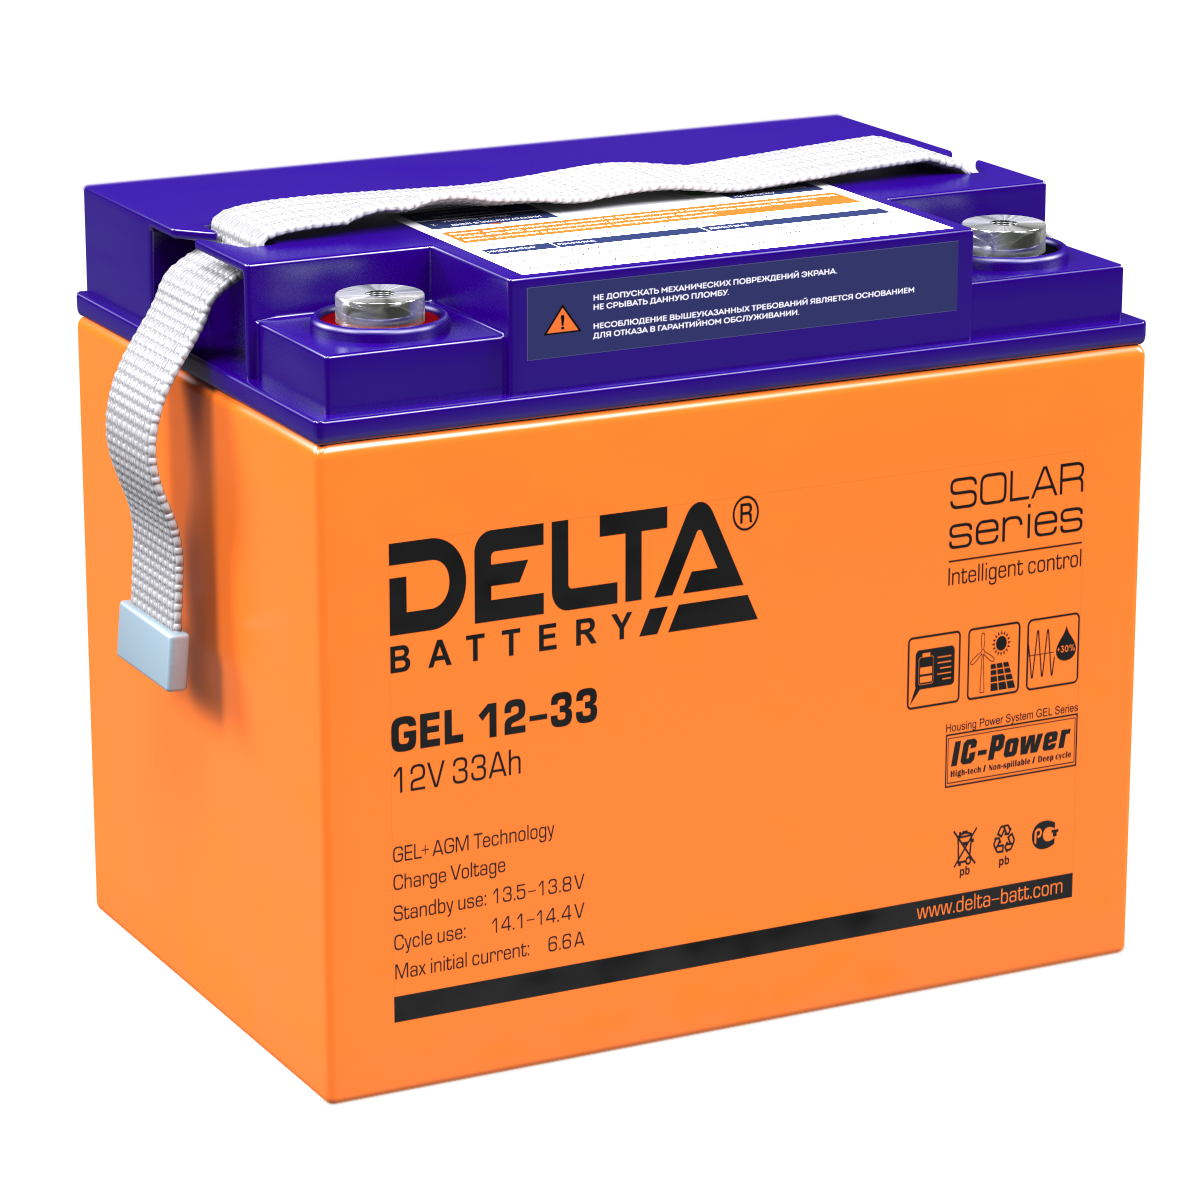  для ИБП Delta GEL 12-33 по цене 11957 ₽/шт.   .